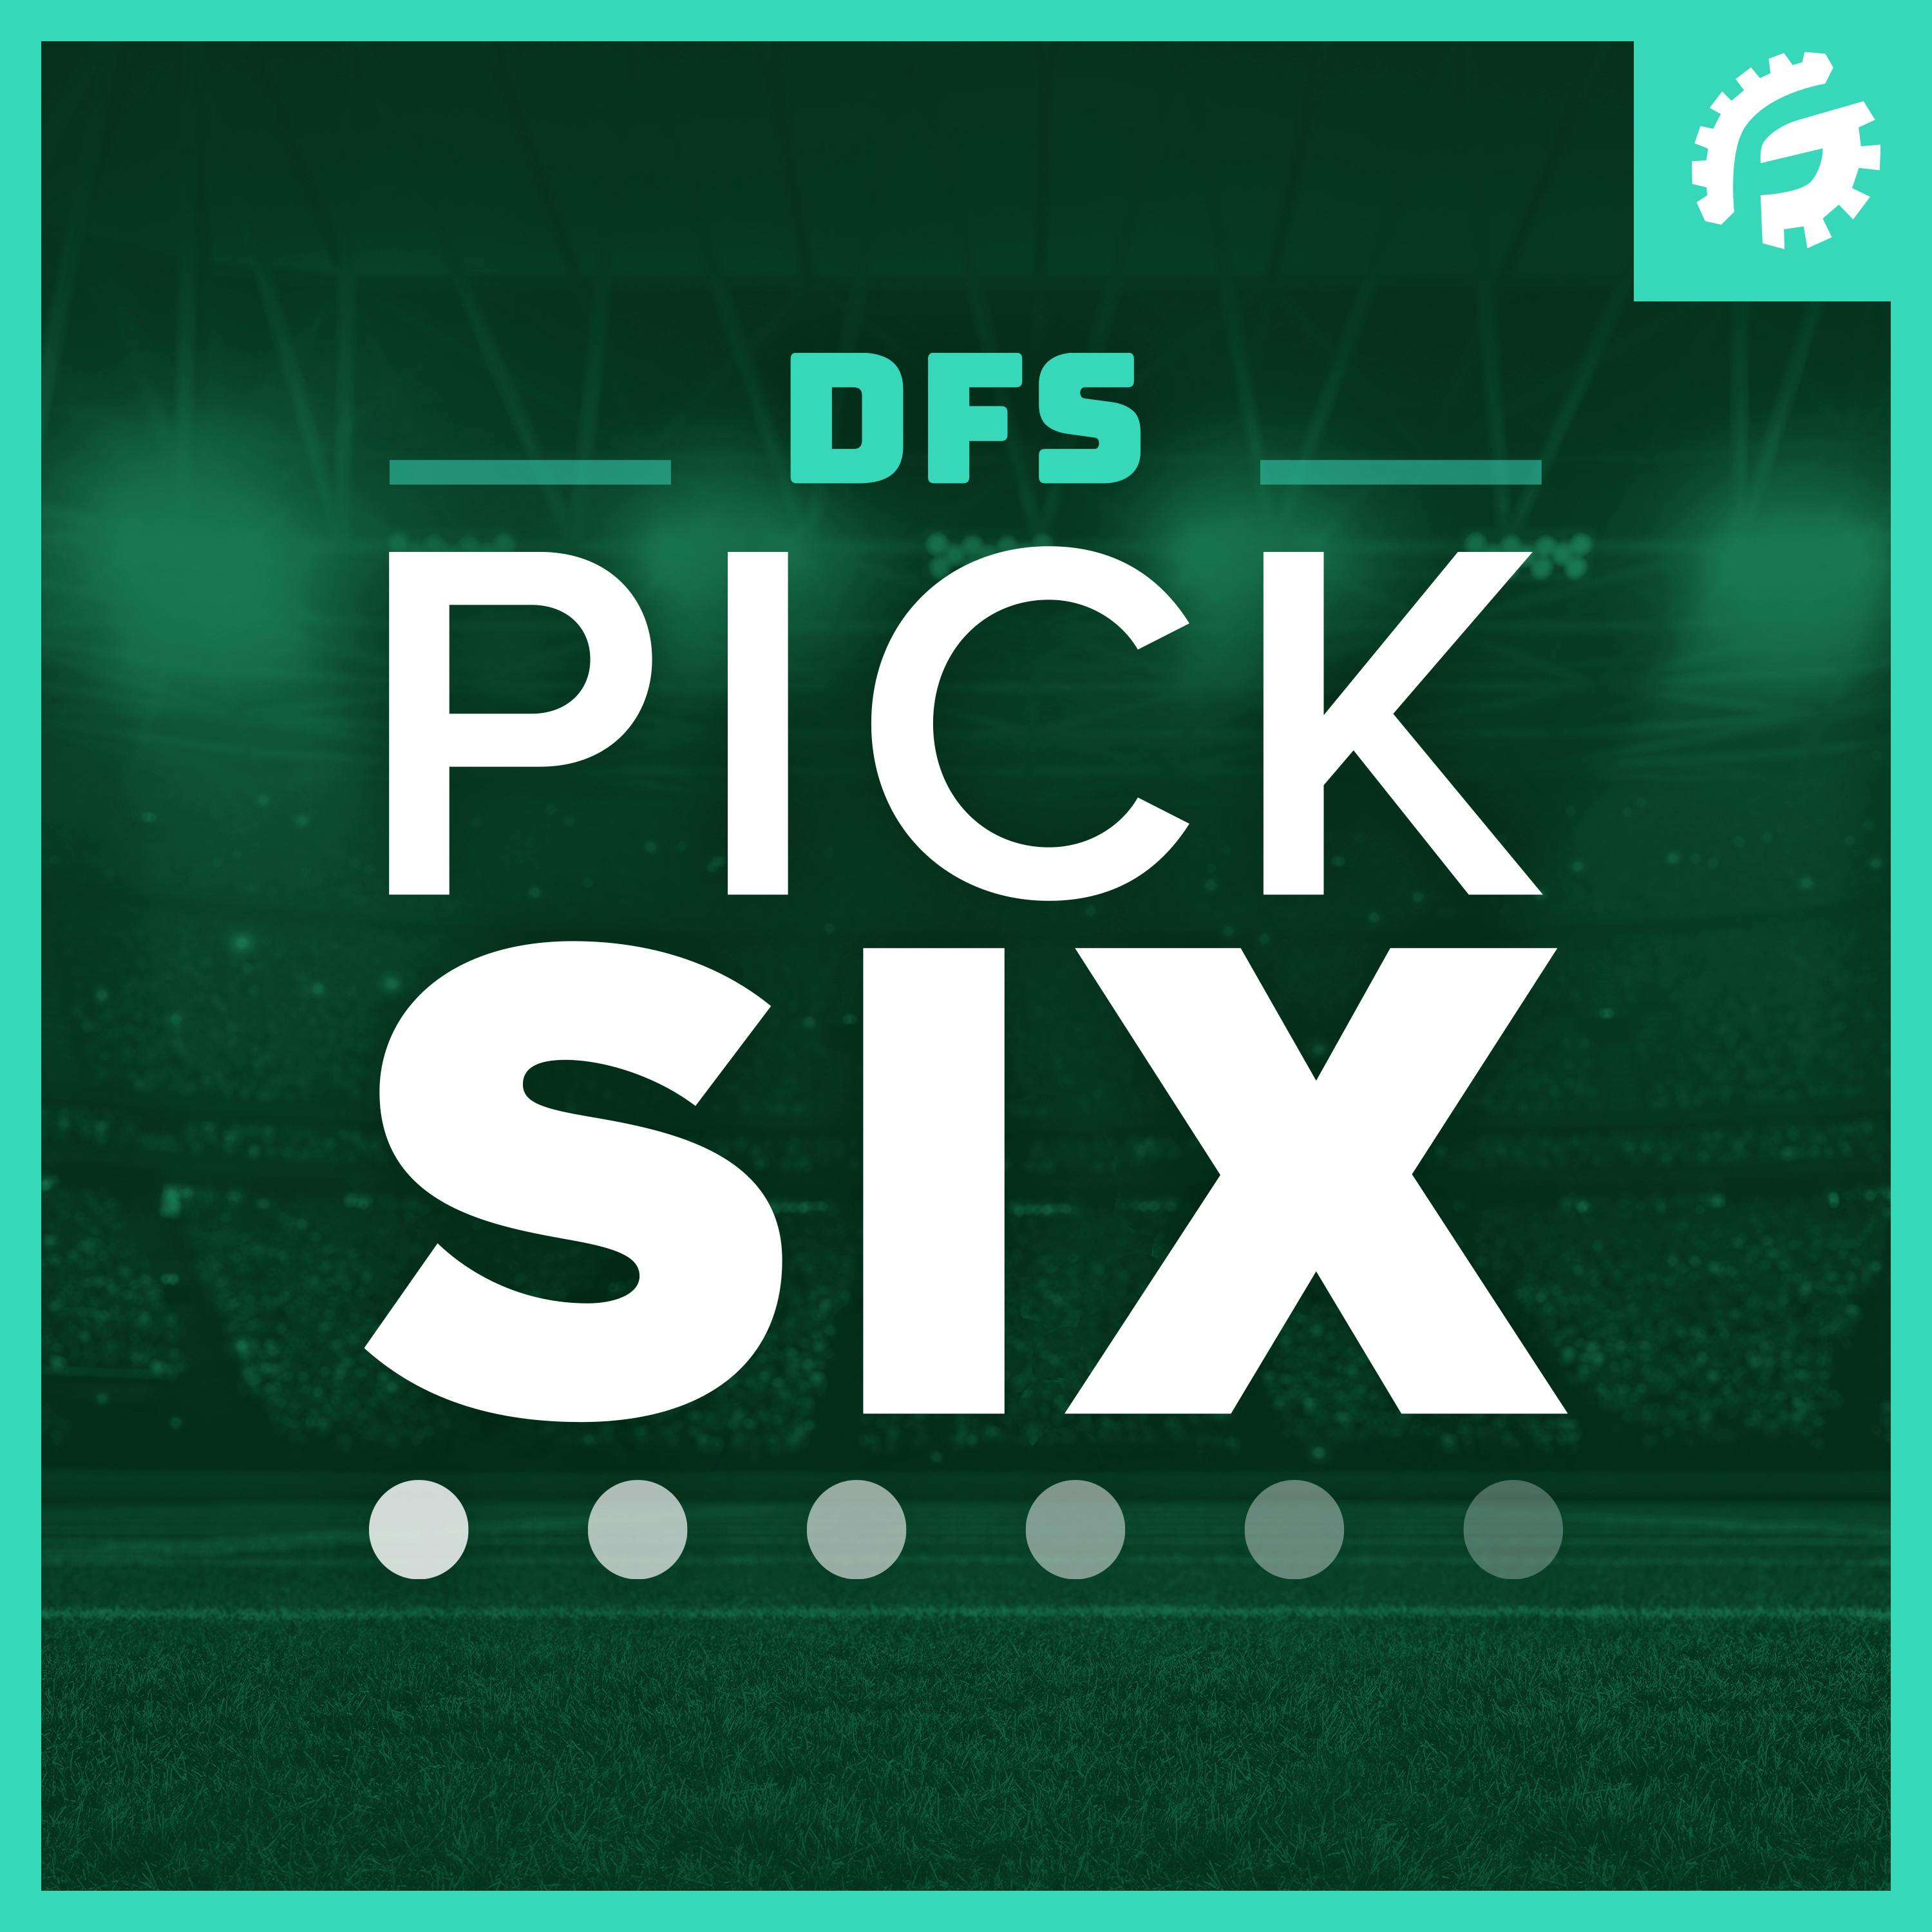 NFL DFS Pick 6 Show - Week 13